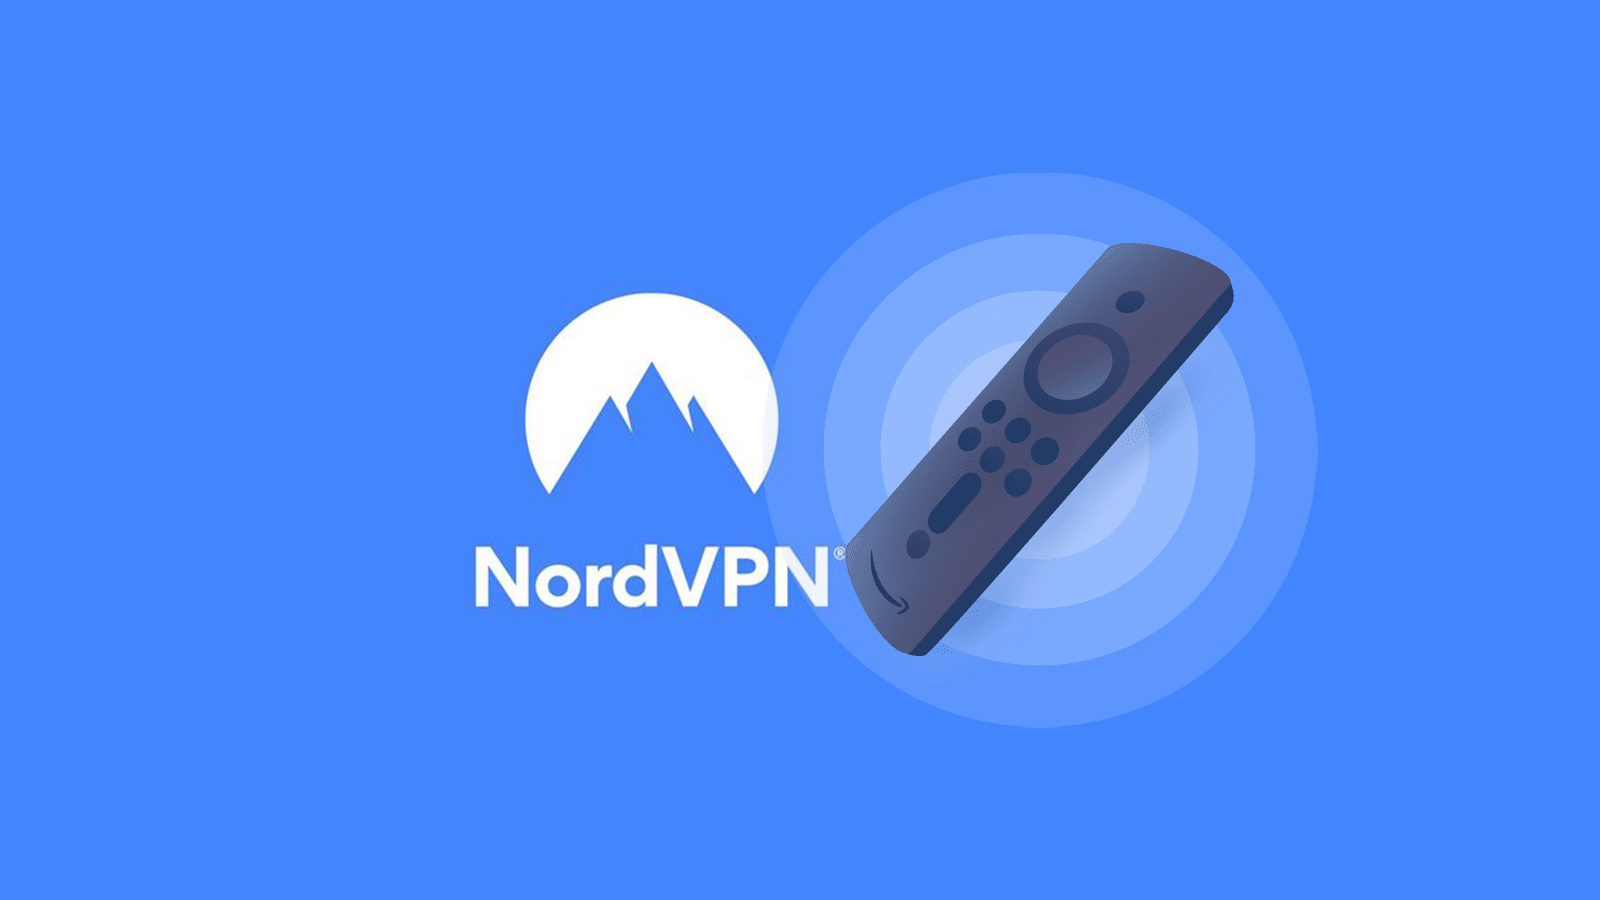 nordvpn download on firestick